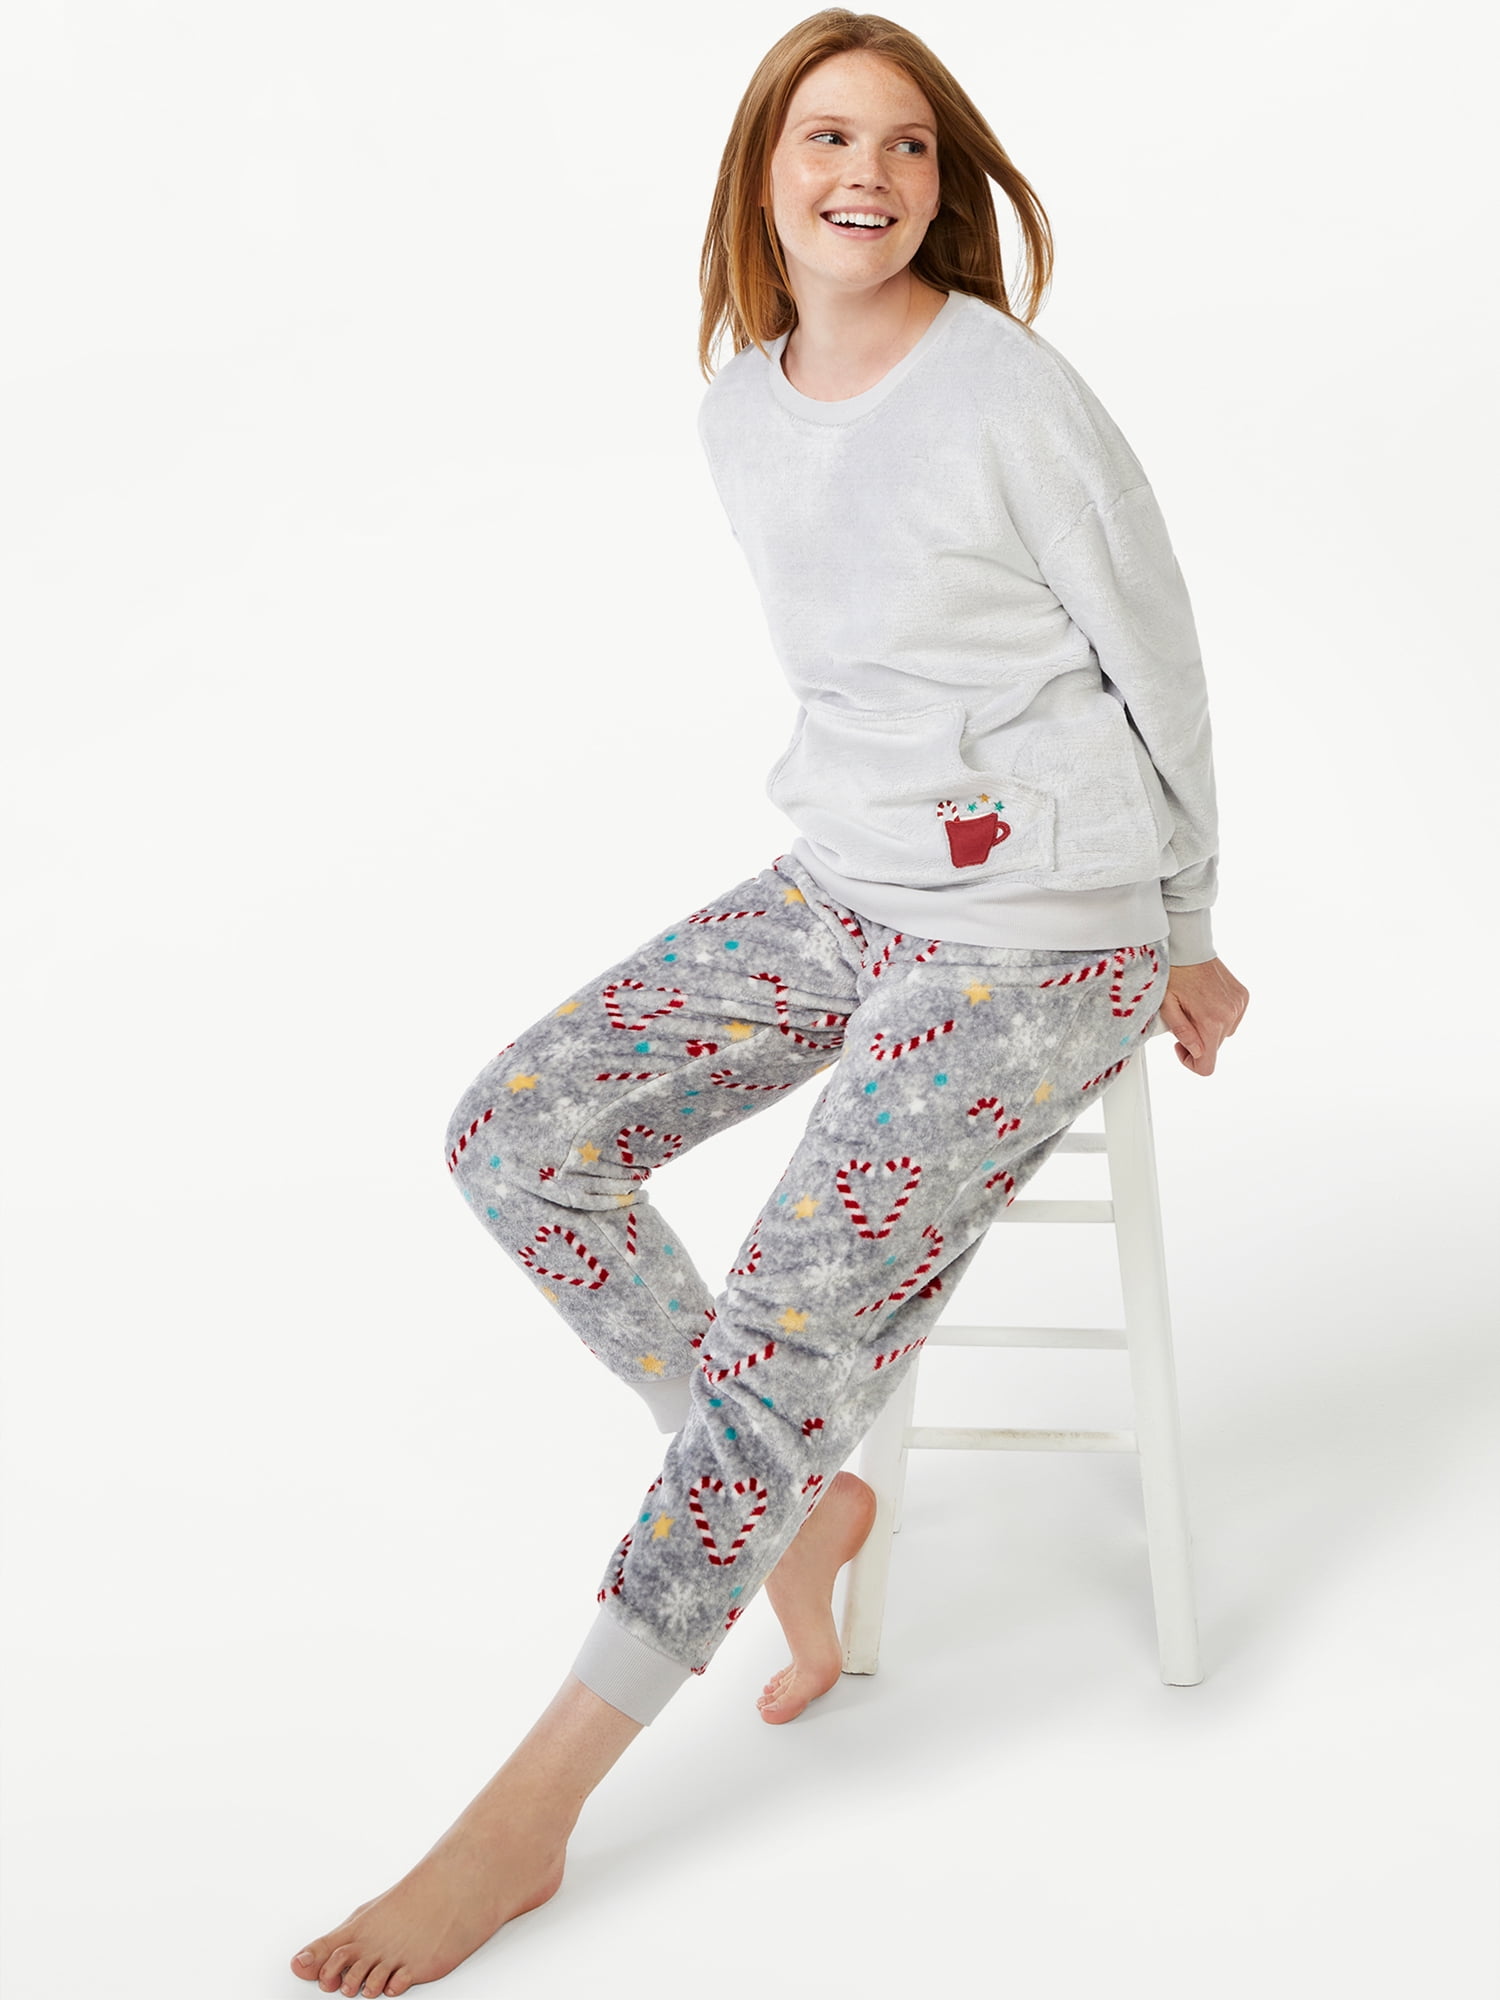 Joyspun Women's Long Sleeve Flannel Sleep Top and Pants Pajama Set,  2-Piece, Sizes XS to 3X 